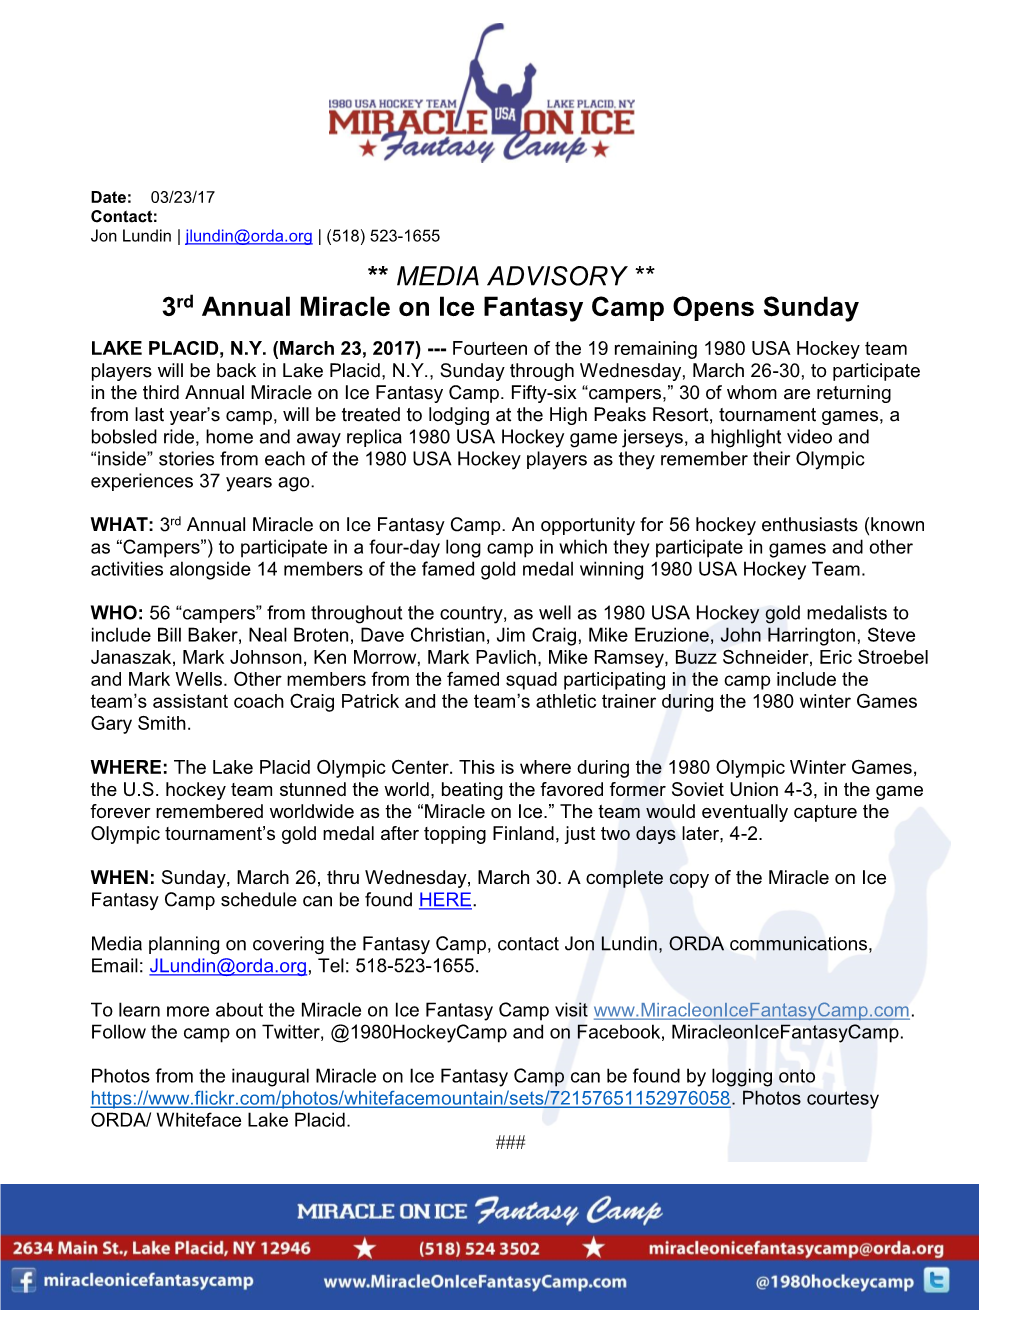 ** MEDIA ADVISORY ** 3Rd Annual Miracle on Ice Fantasy Camp Opens Sunday